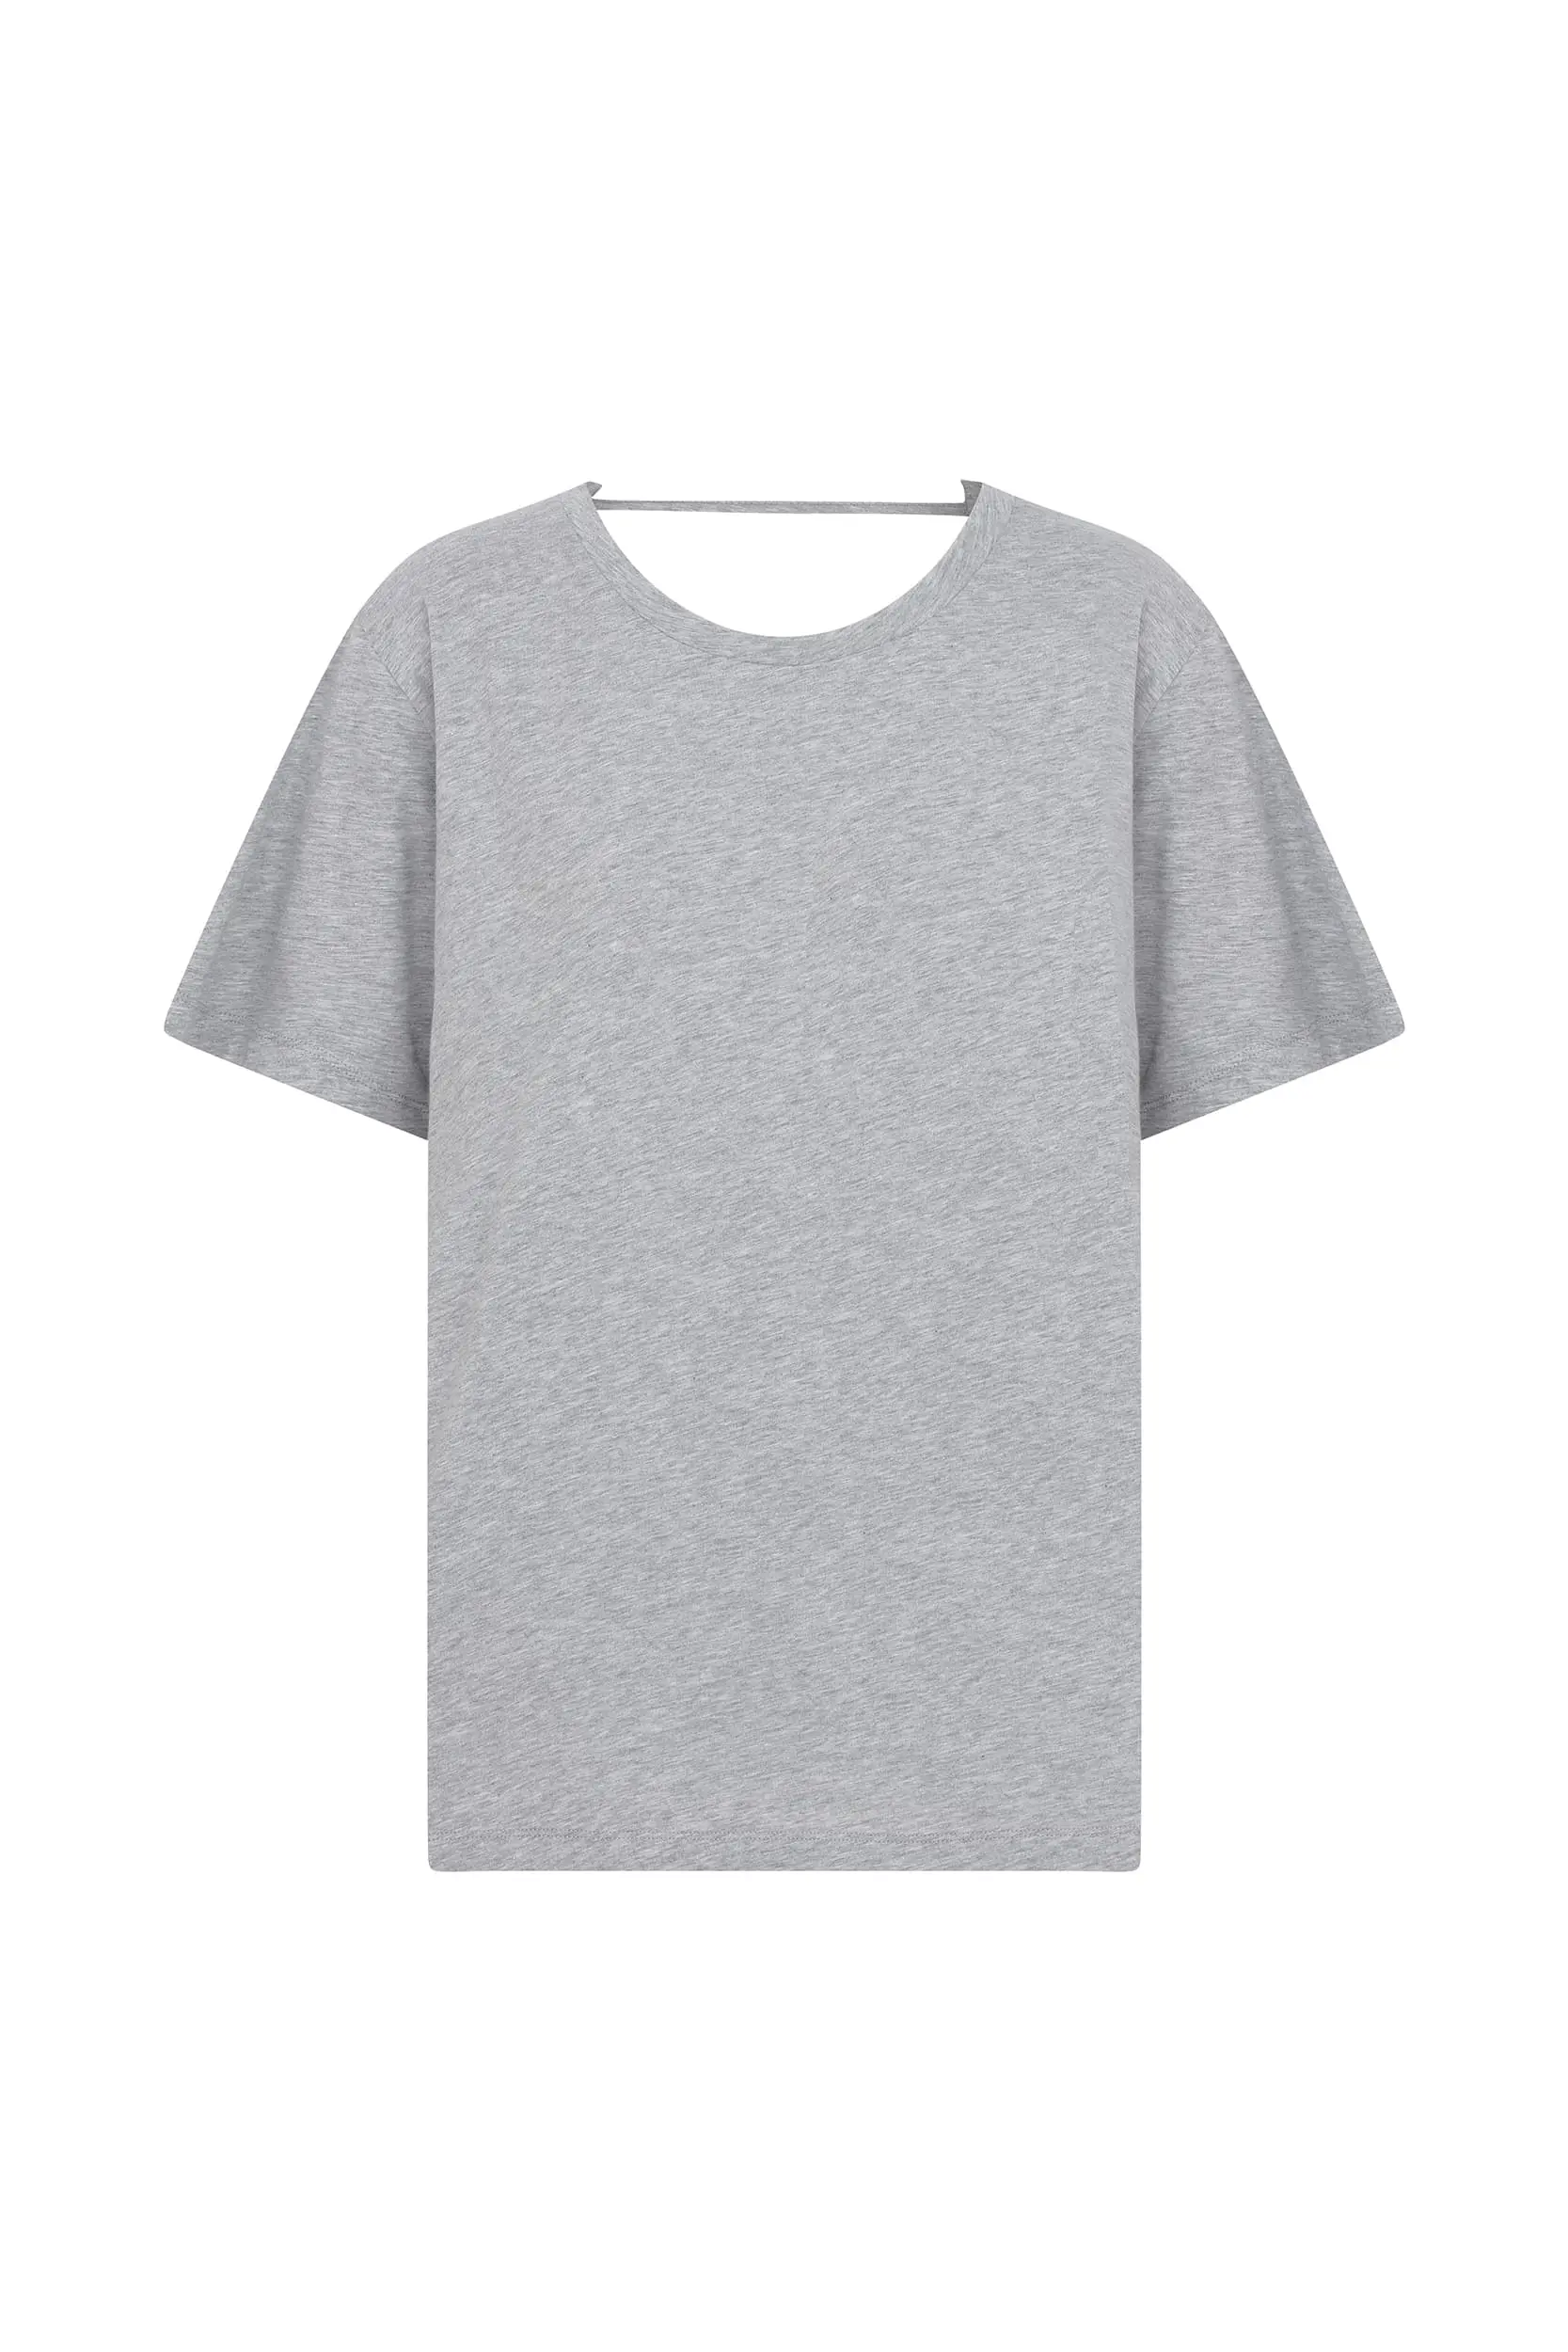 Roman Low Back Women's T-Shirt - 1 / Grey. 1